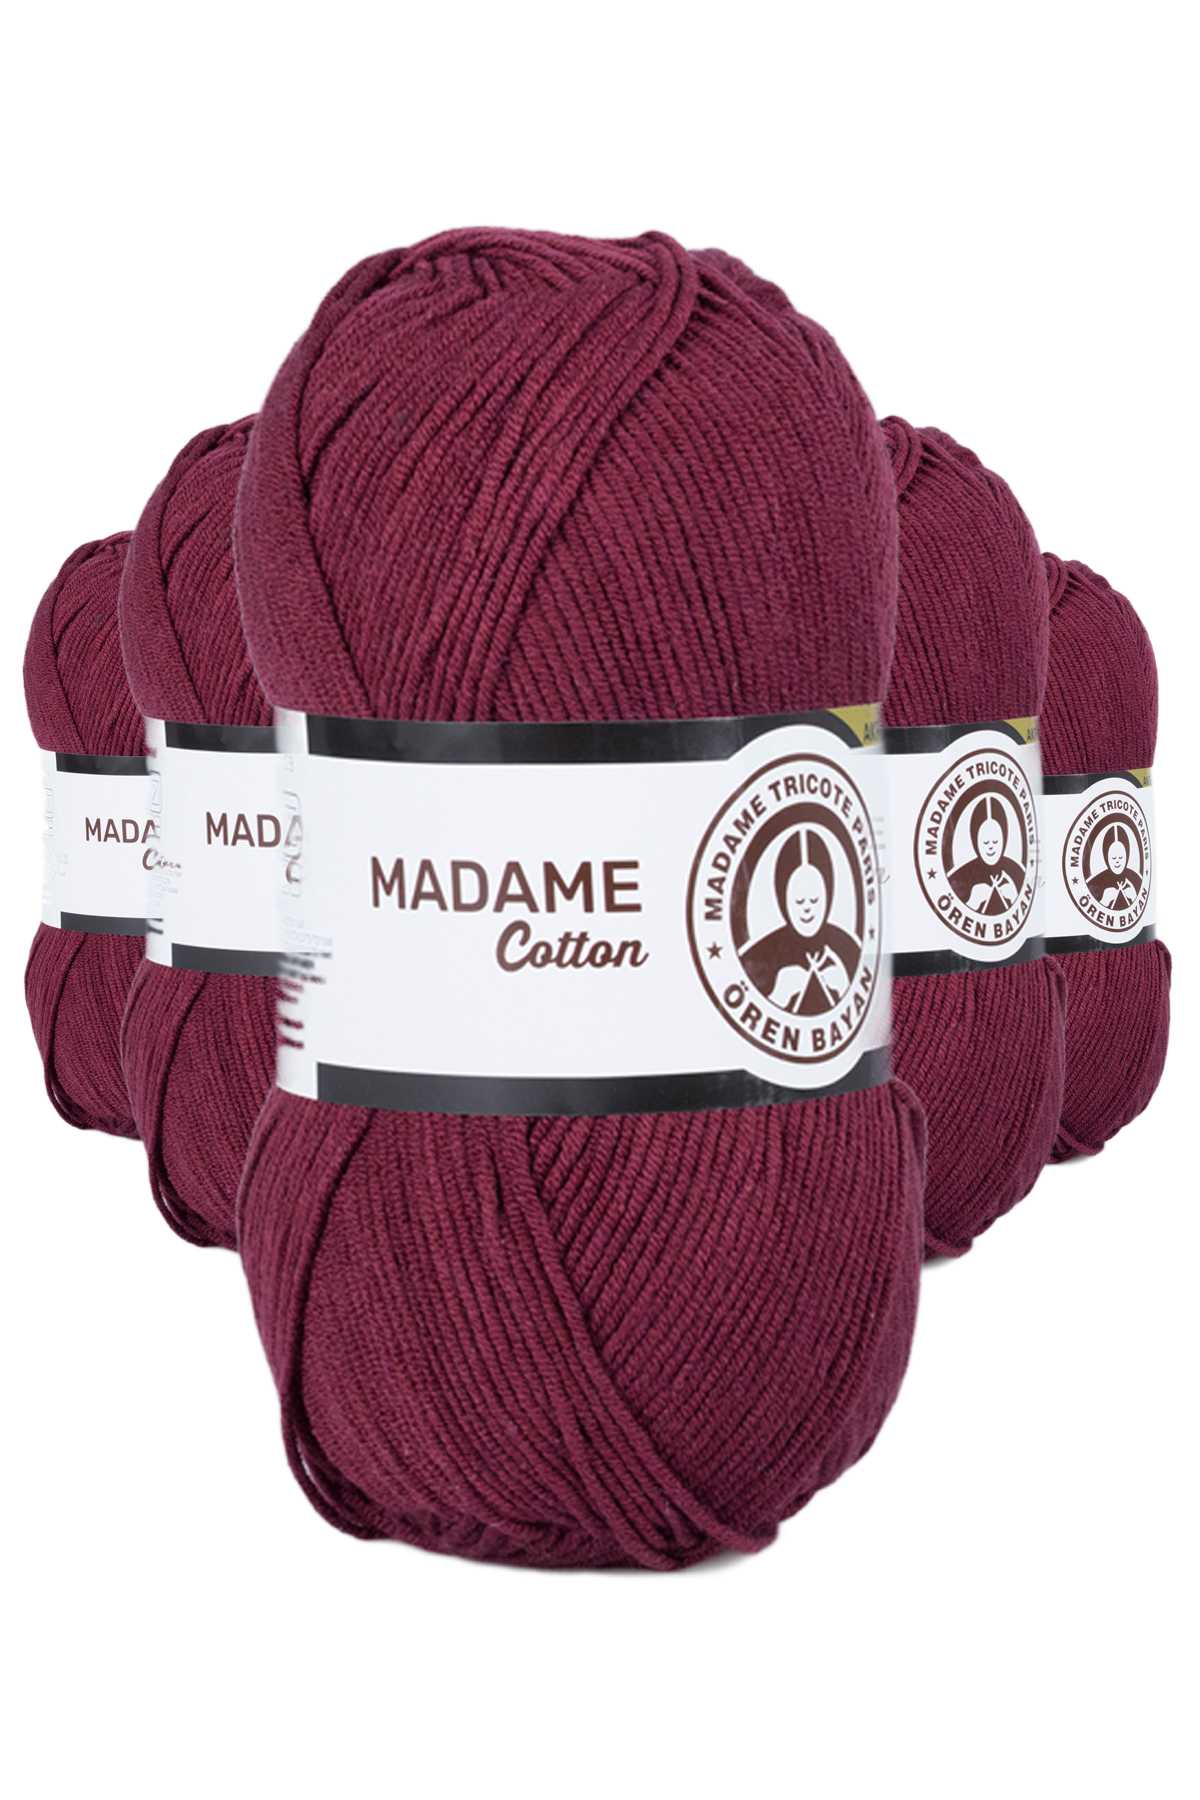 5 Adet Madame Cotton El Örgü İpi Yünü 100 gr 010 Bordo